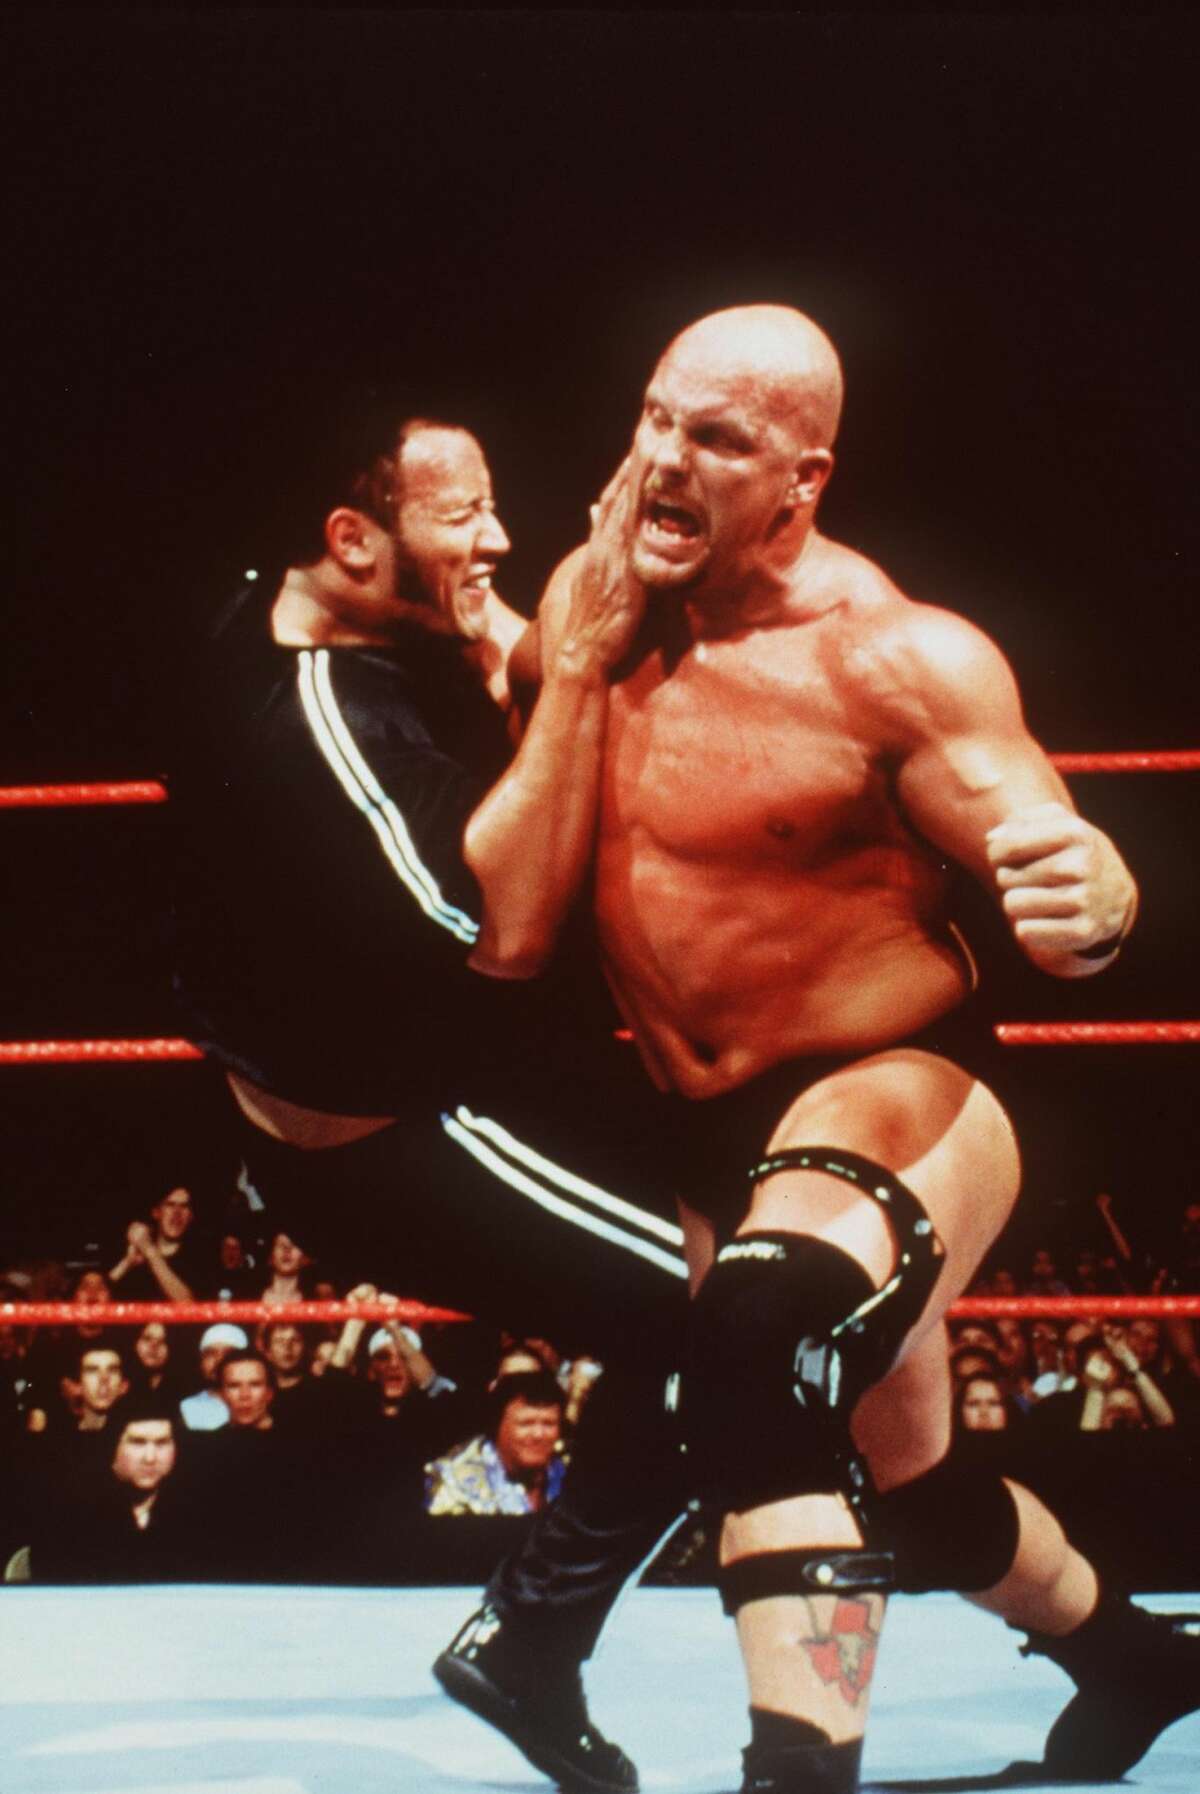 Then: "Stone Cold" Steve Austin in "WWF Smackdown"